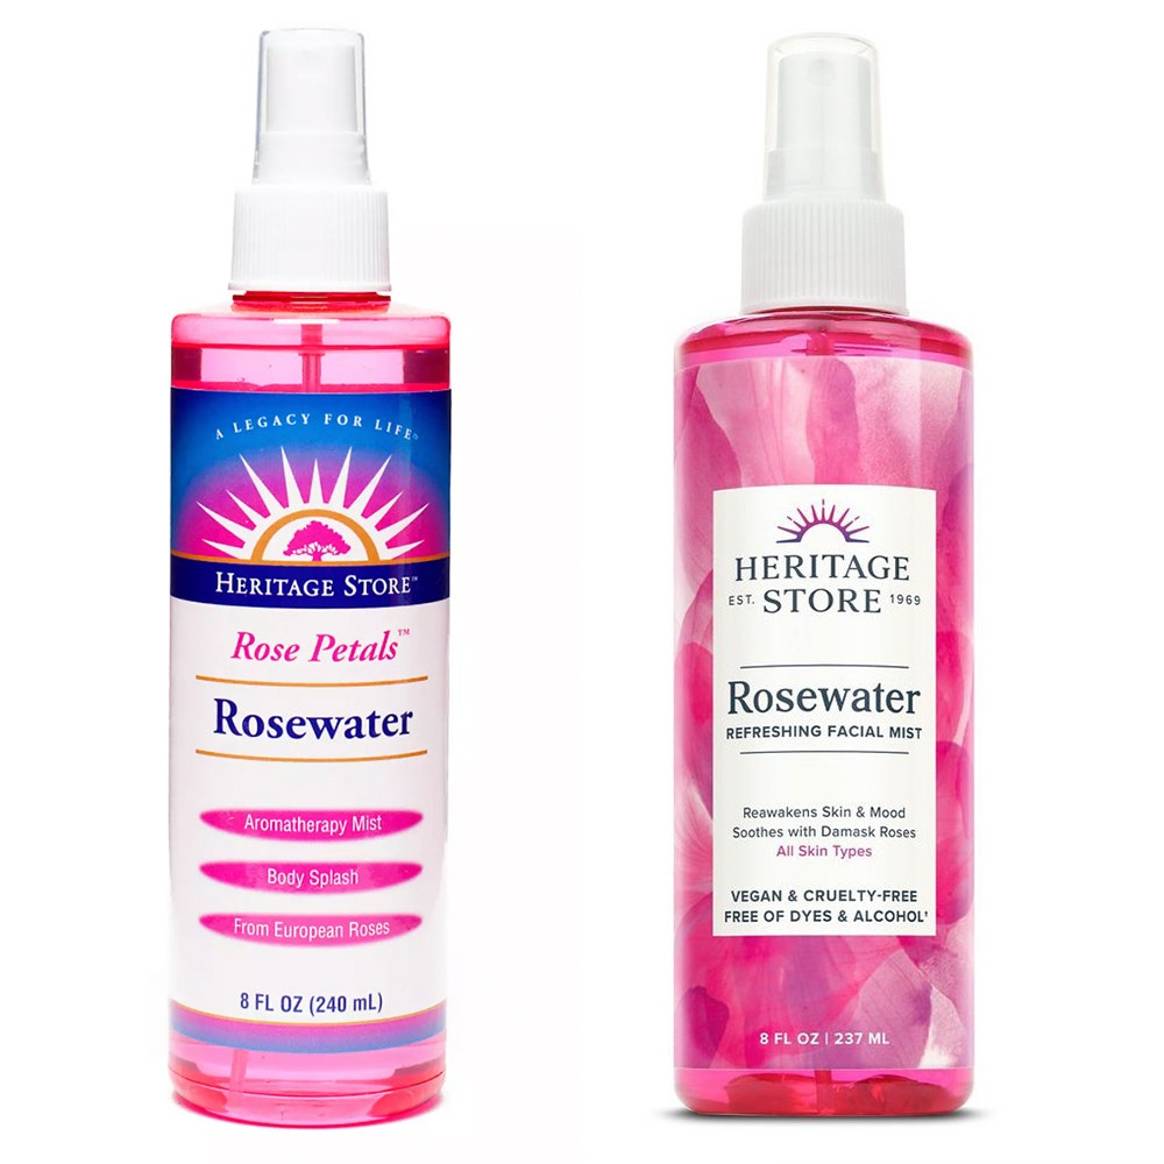 Image: Heritage Store; Rosewater Mist comparison